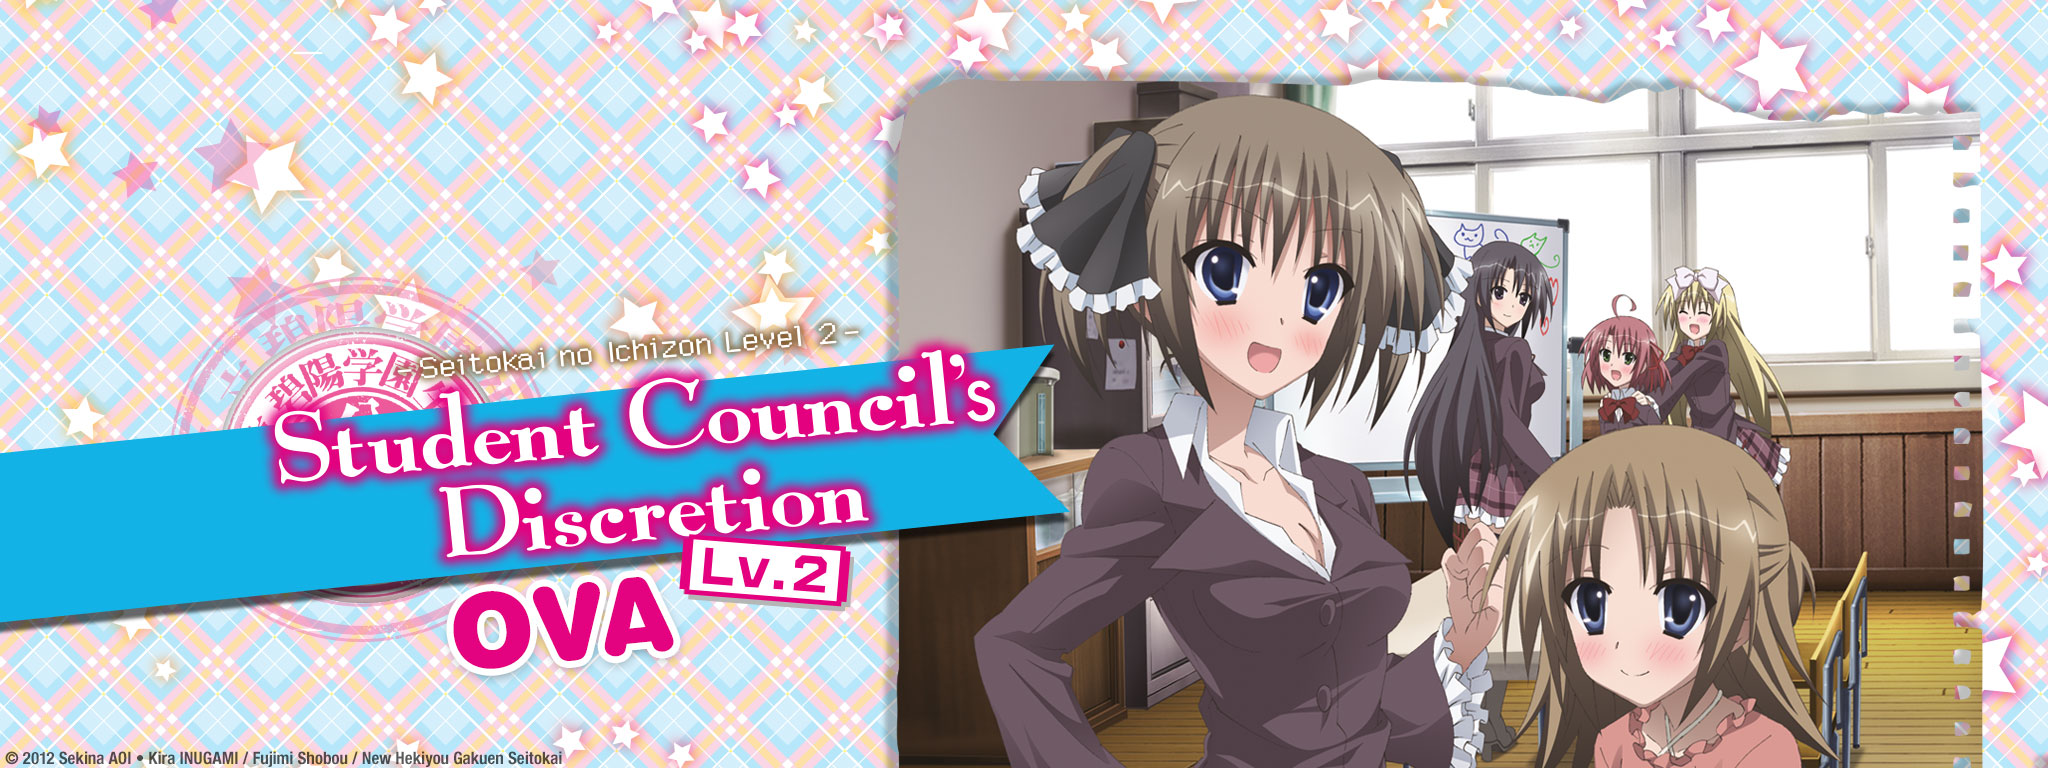 Title Art for Student Council's Discretion Level 2 OVA